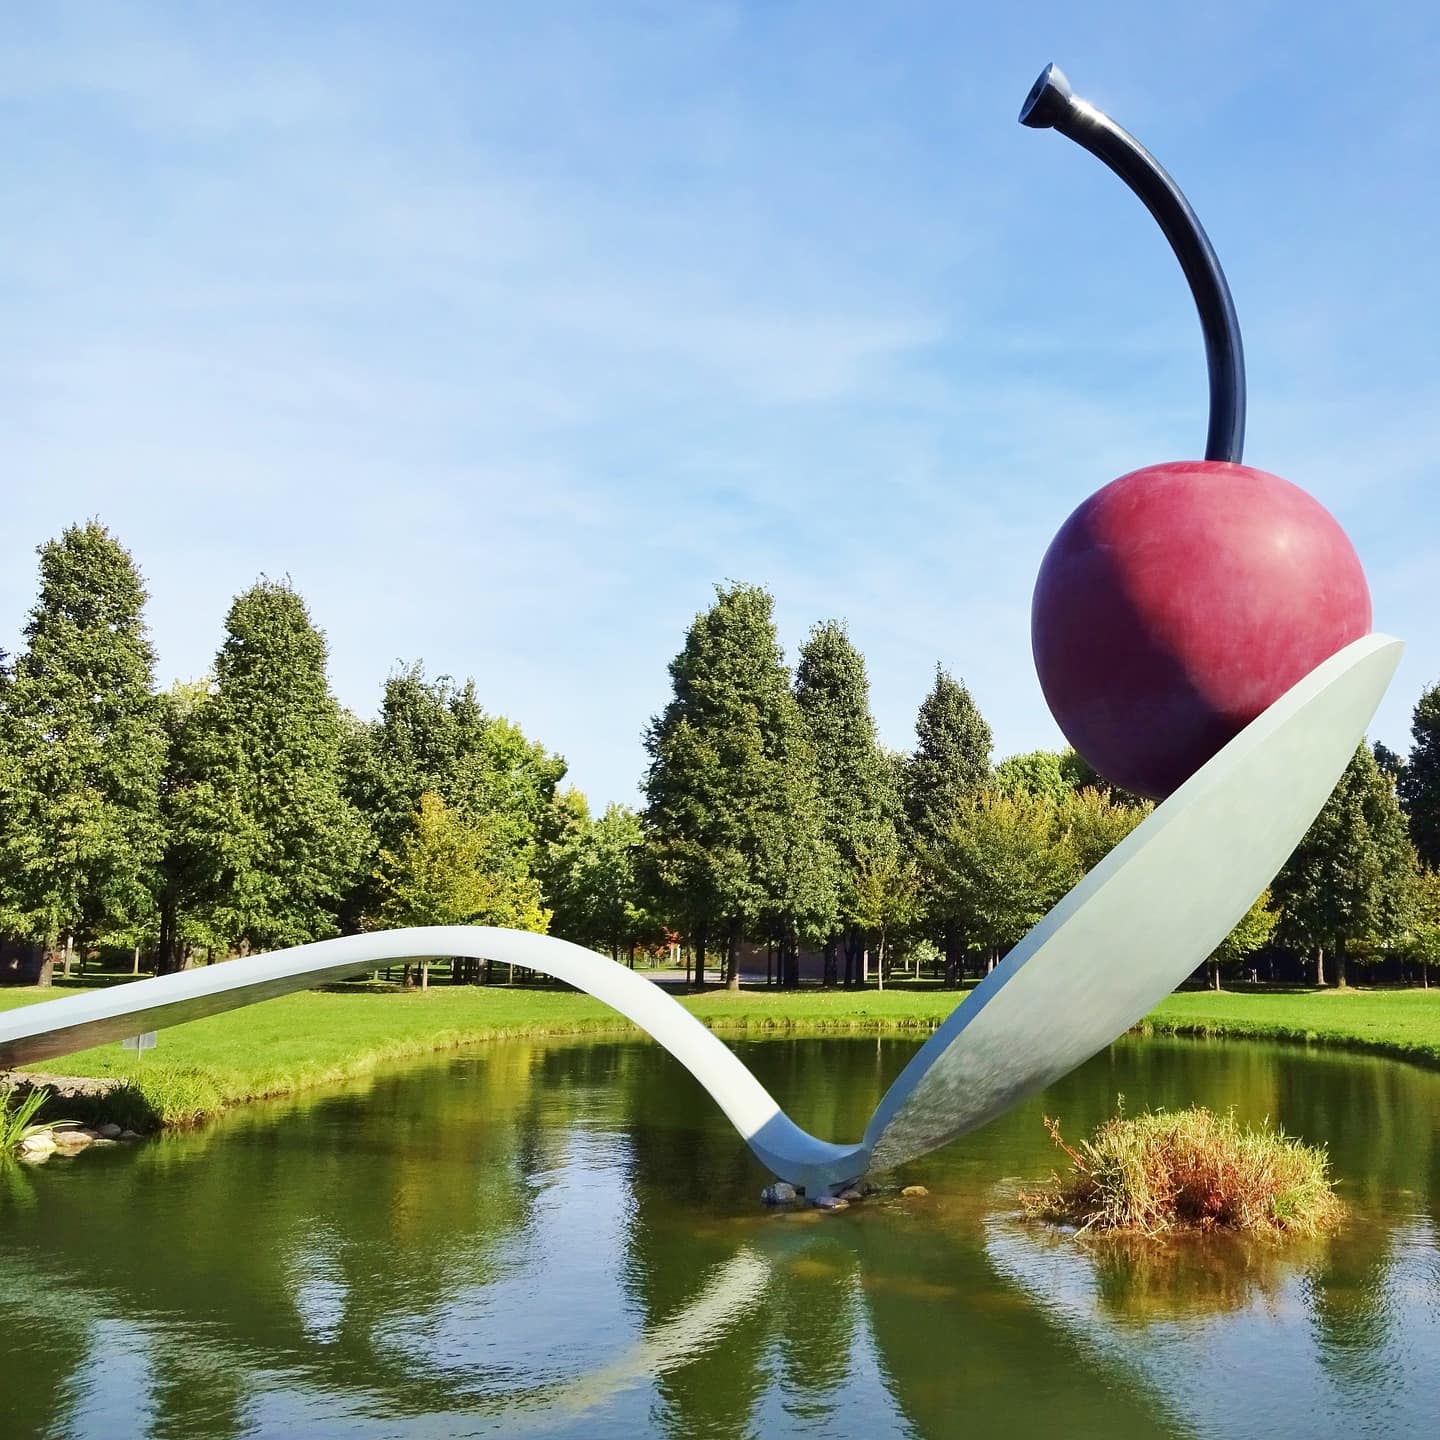 A giant cherry on a spoon at Minneapolis Sculpture Garden